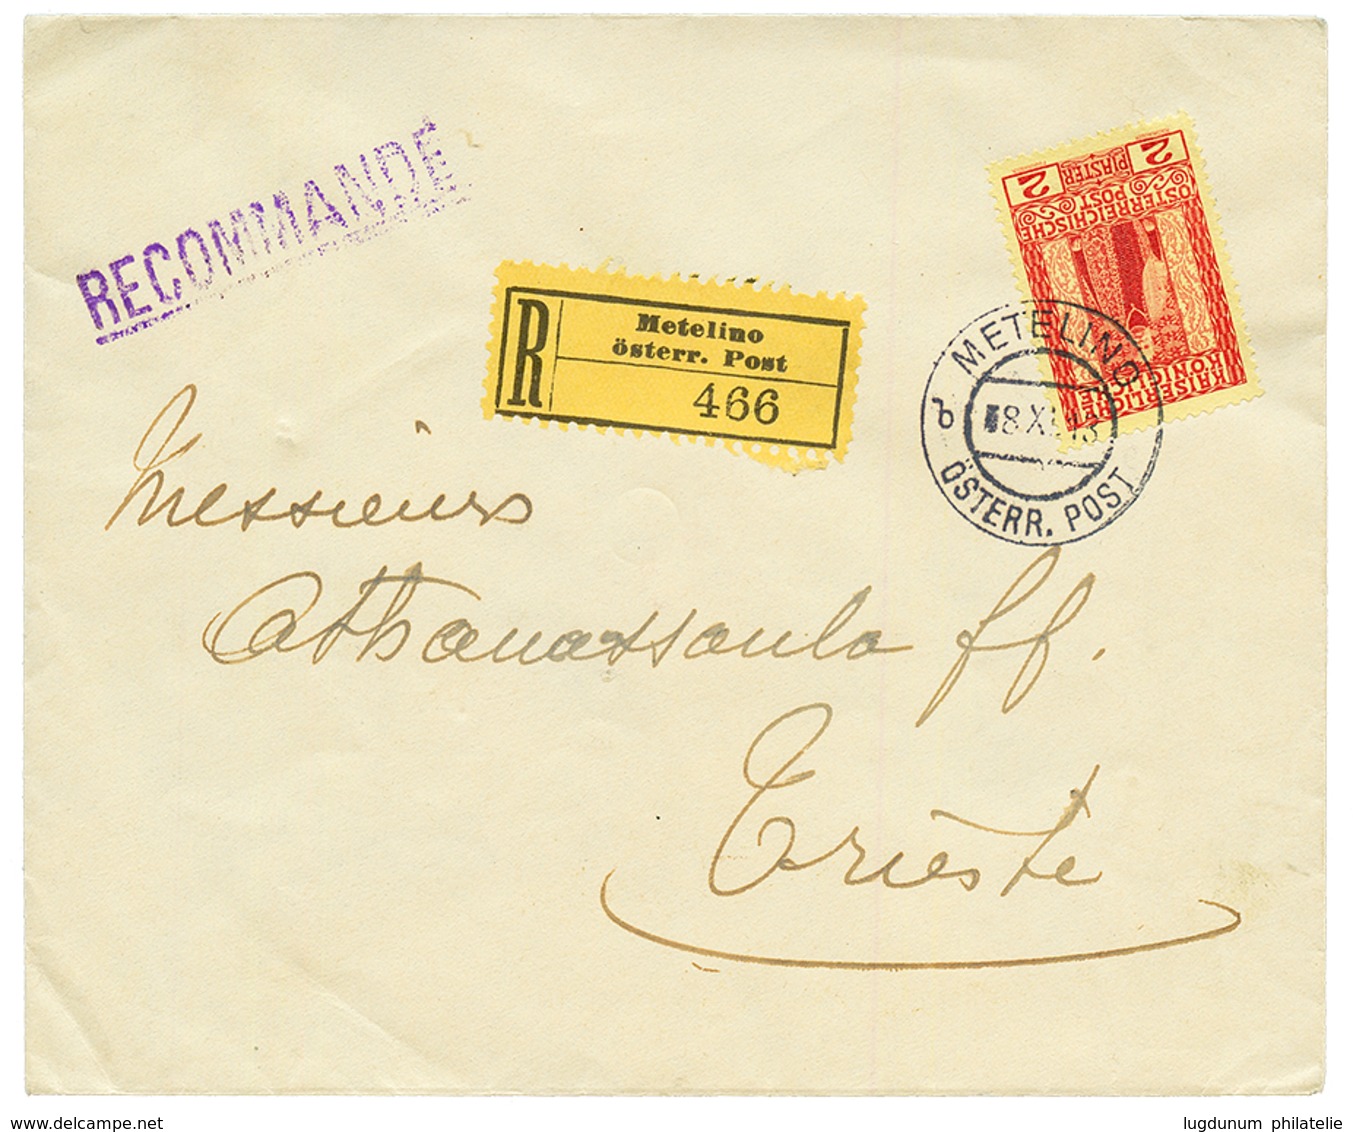 METELINE : 1913 2P Canc. METELINO On REGISTERED Envelope To TRIESTE. Superb. - Eastern Austria